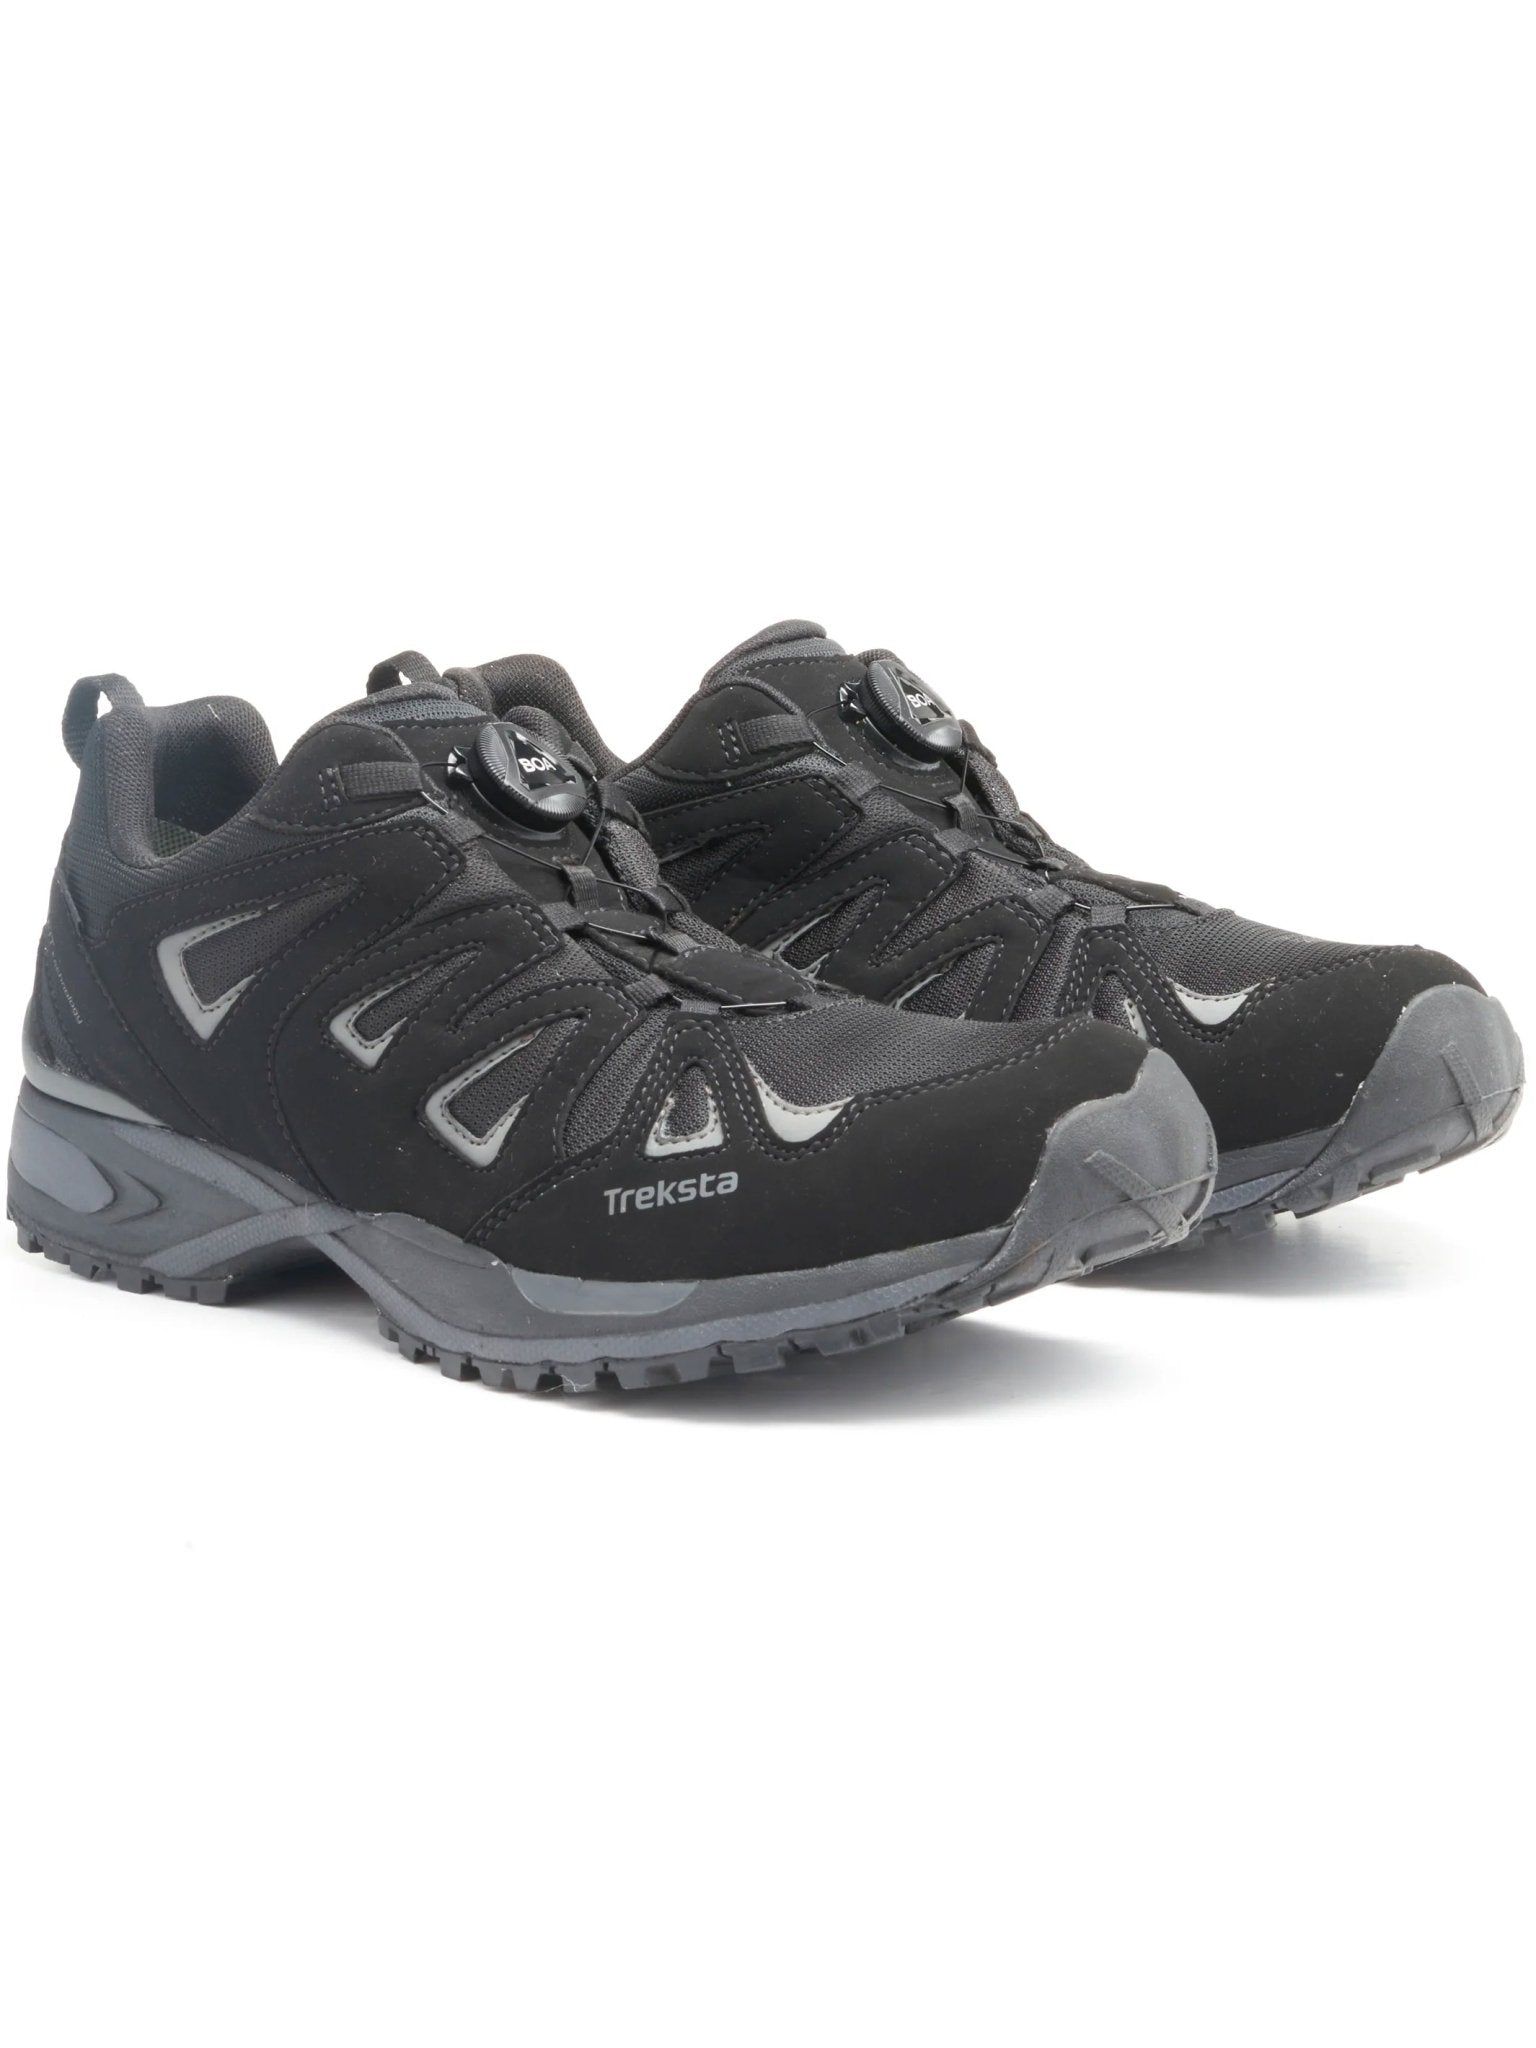 Treksta Treksta - Gore - Tex Waterproof Trainer / Shoe, BOA Lacing - Buxton Boa Low GTX Shoes